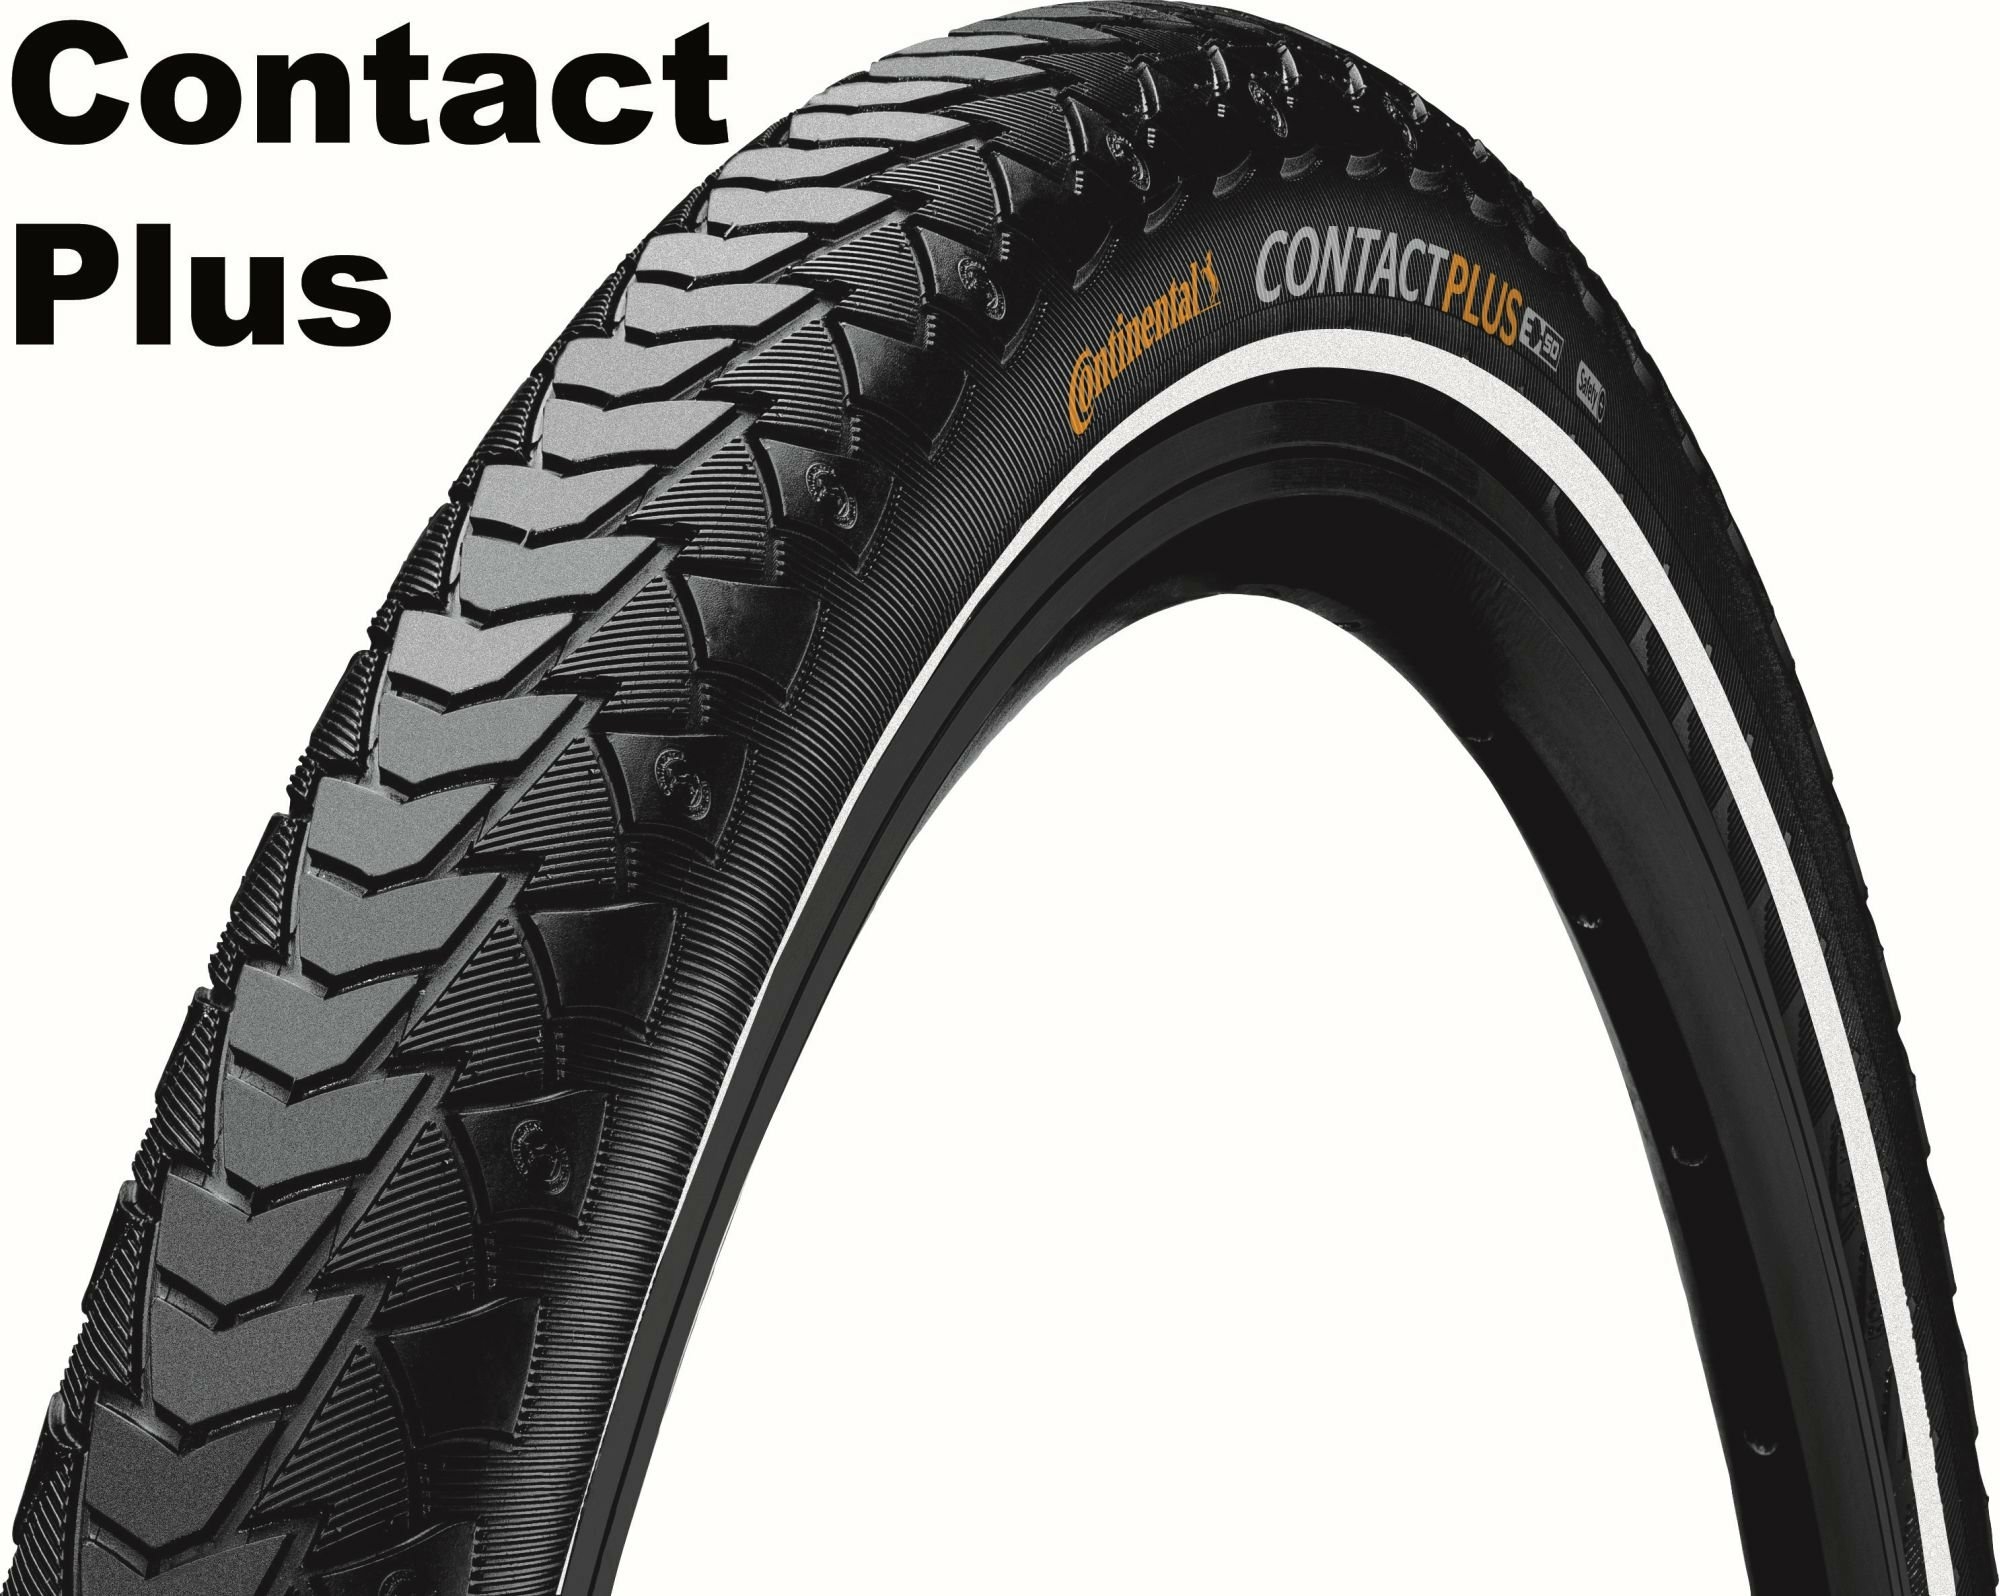 Fahrradteile/Bereifung: Continental  SafetyPlus Breaker - 26 Zoll Contact Plus (47-559) 